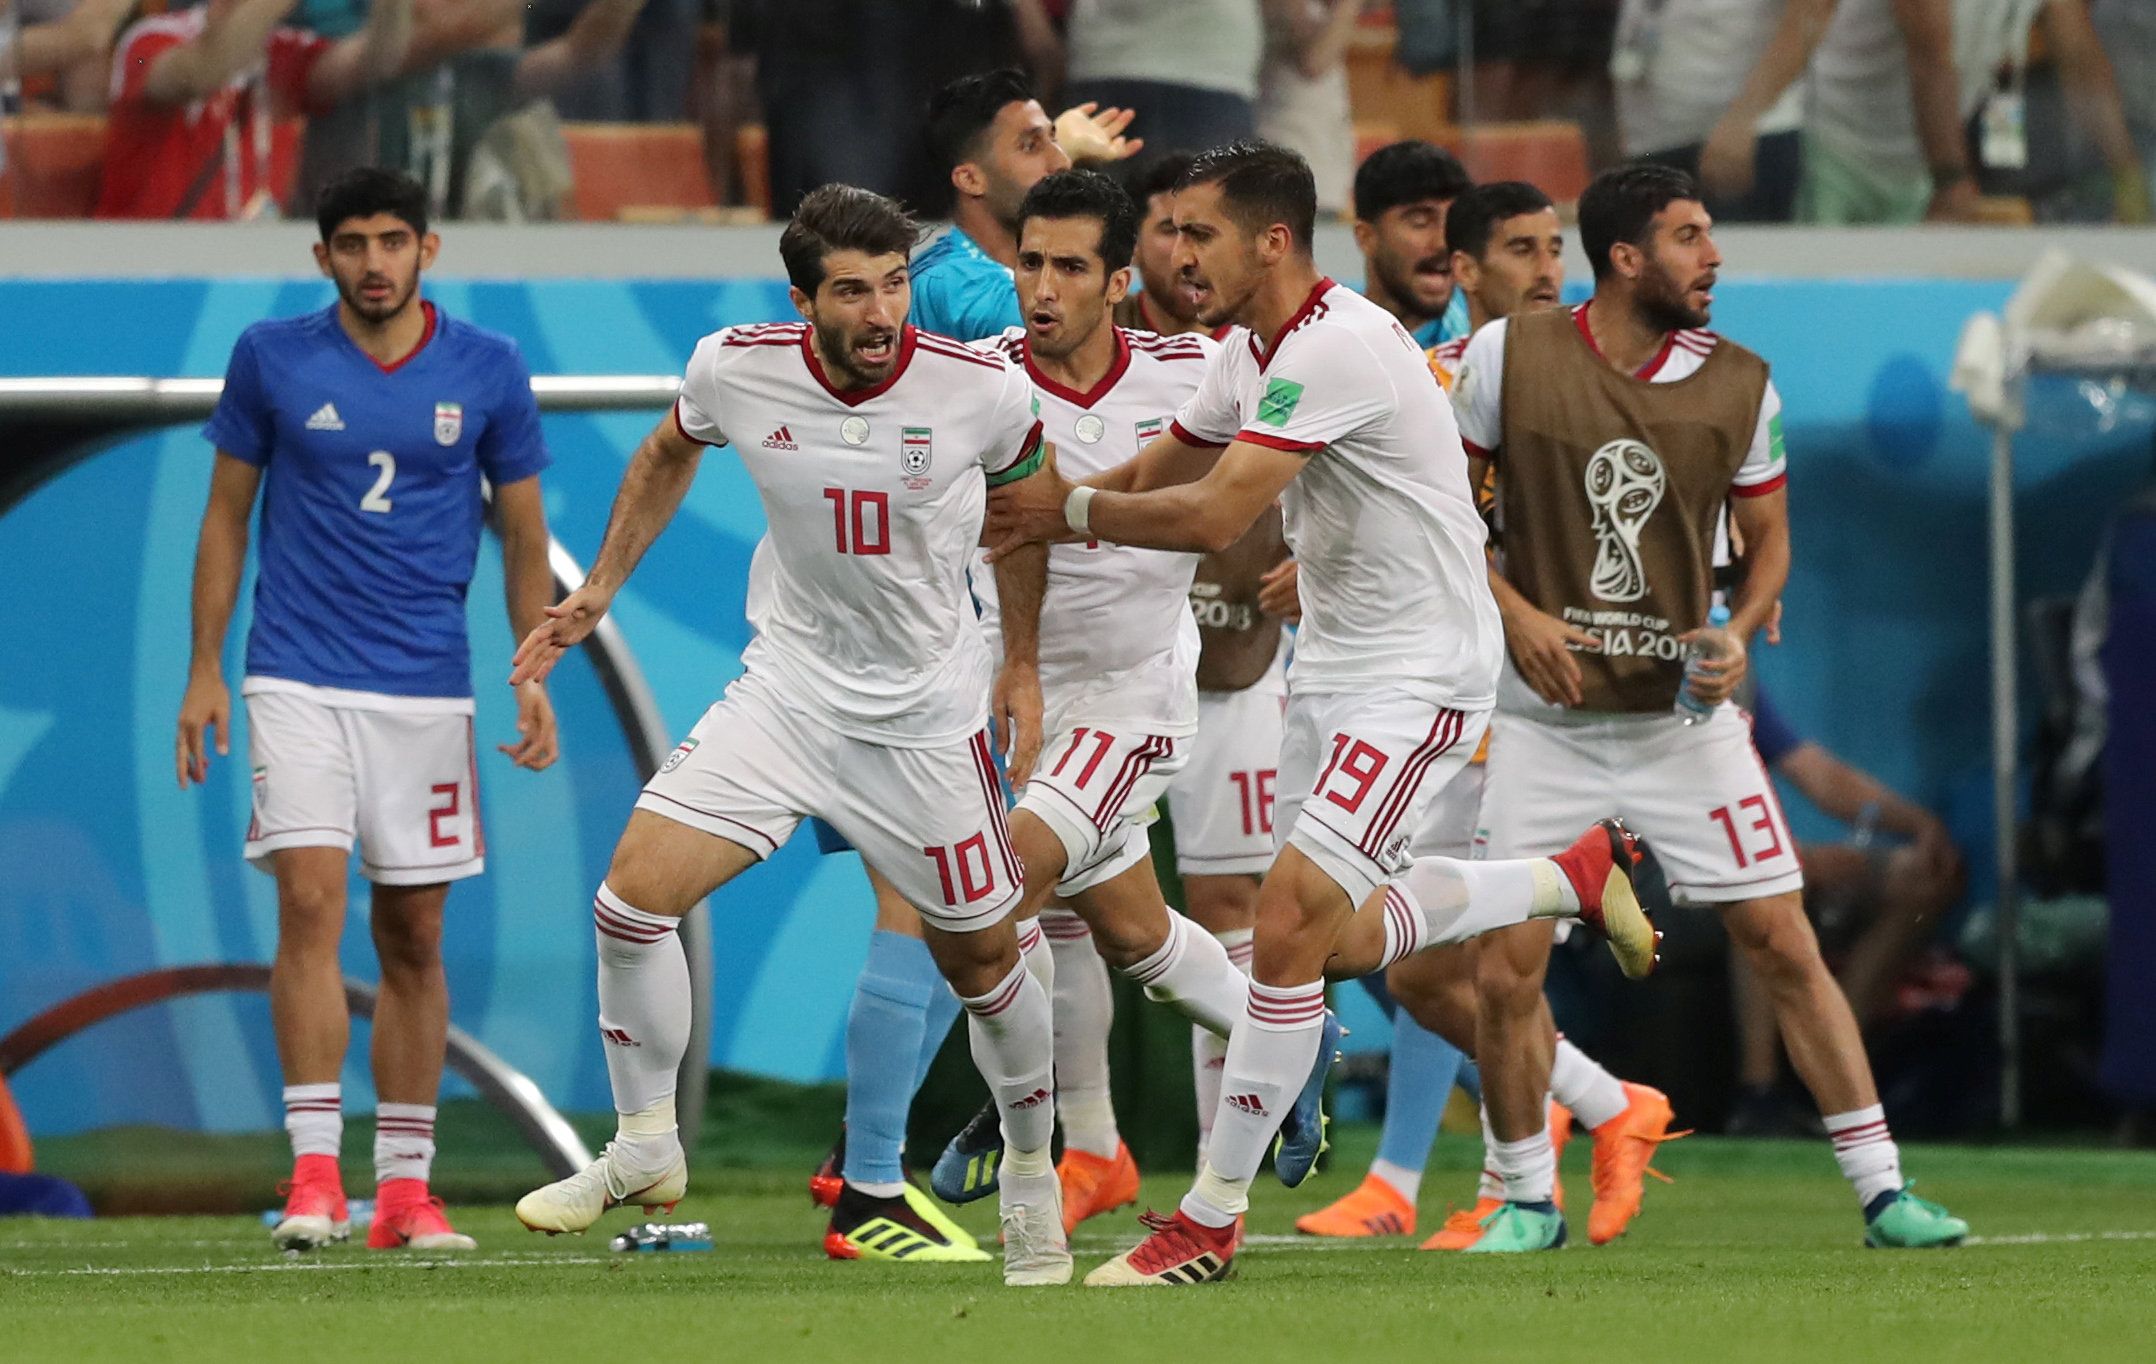 Soccer Football - World Cup - Group B - Iran vs Portugal - Mordovia Arena, Saransk, Russia - June 25, 2018   Iran's Karim Ansarifard celebrates scoring their first goal with Majid Hosseini        REUTERS/Ivan Alvarado